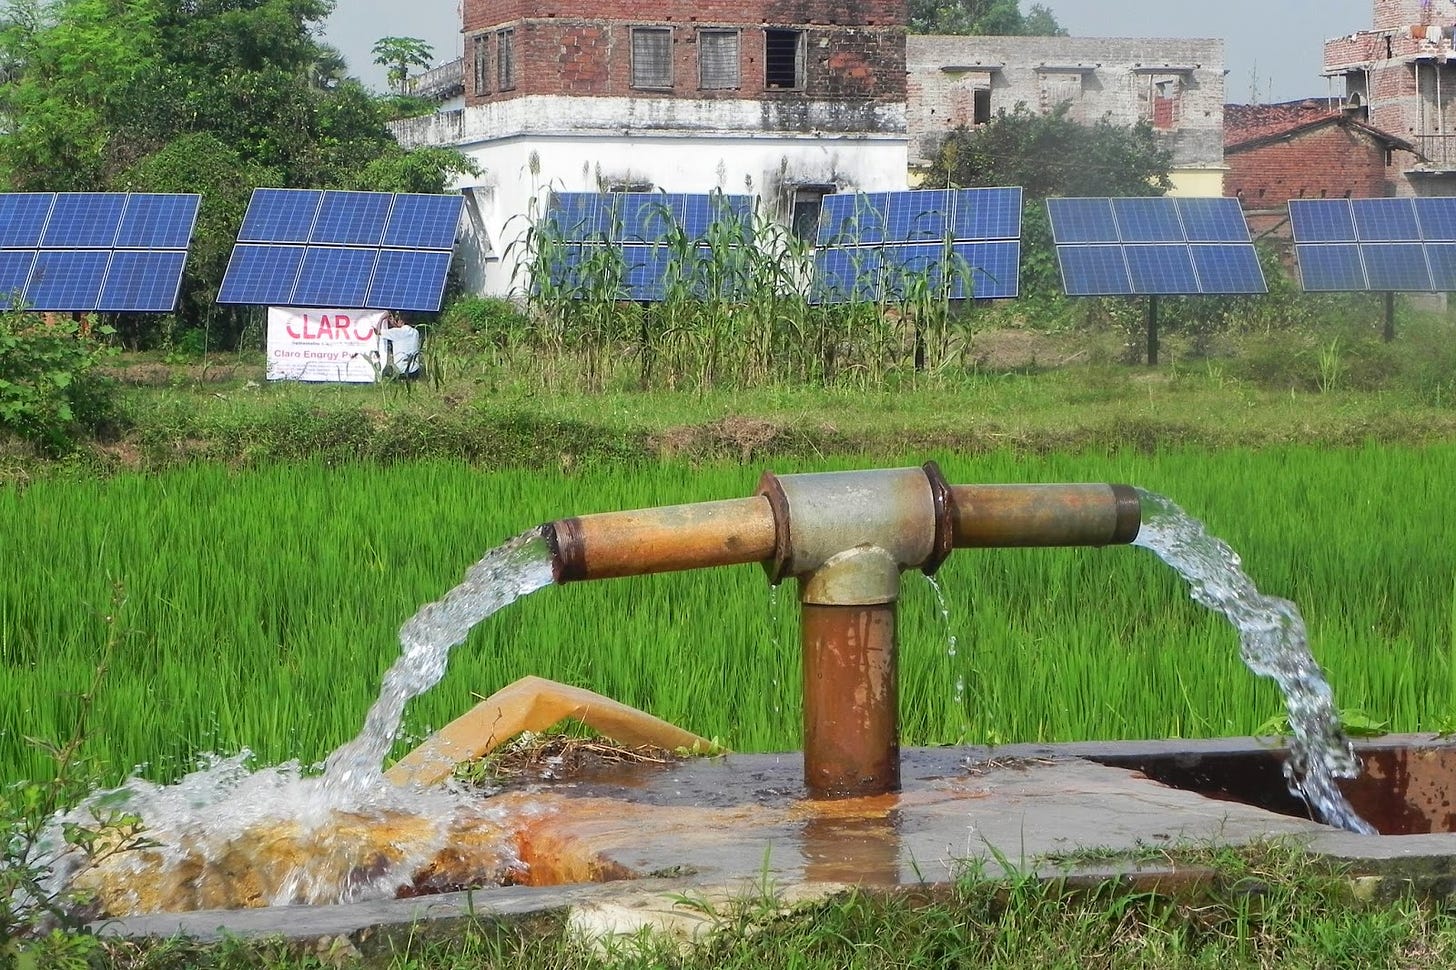 CLARO Energy - Solar Powered Irrigation in Rural India